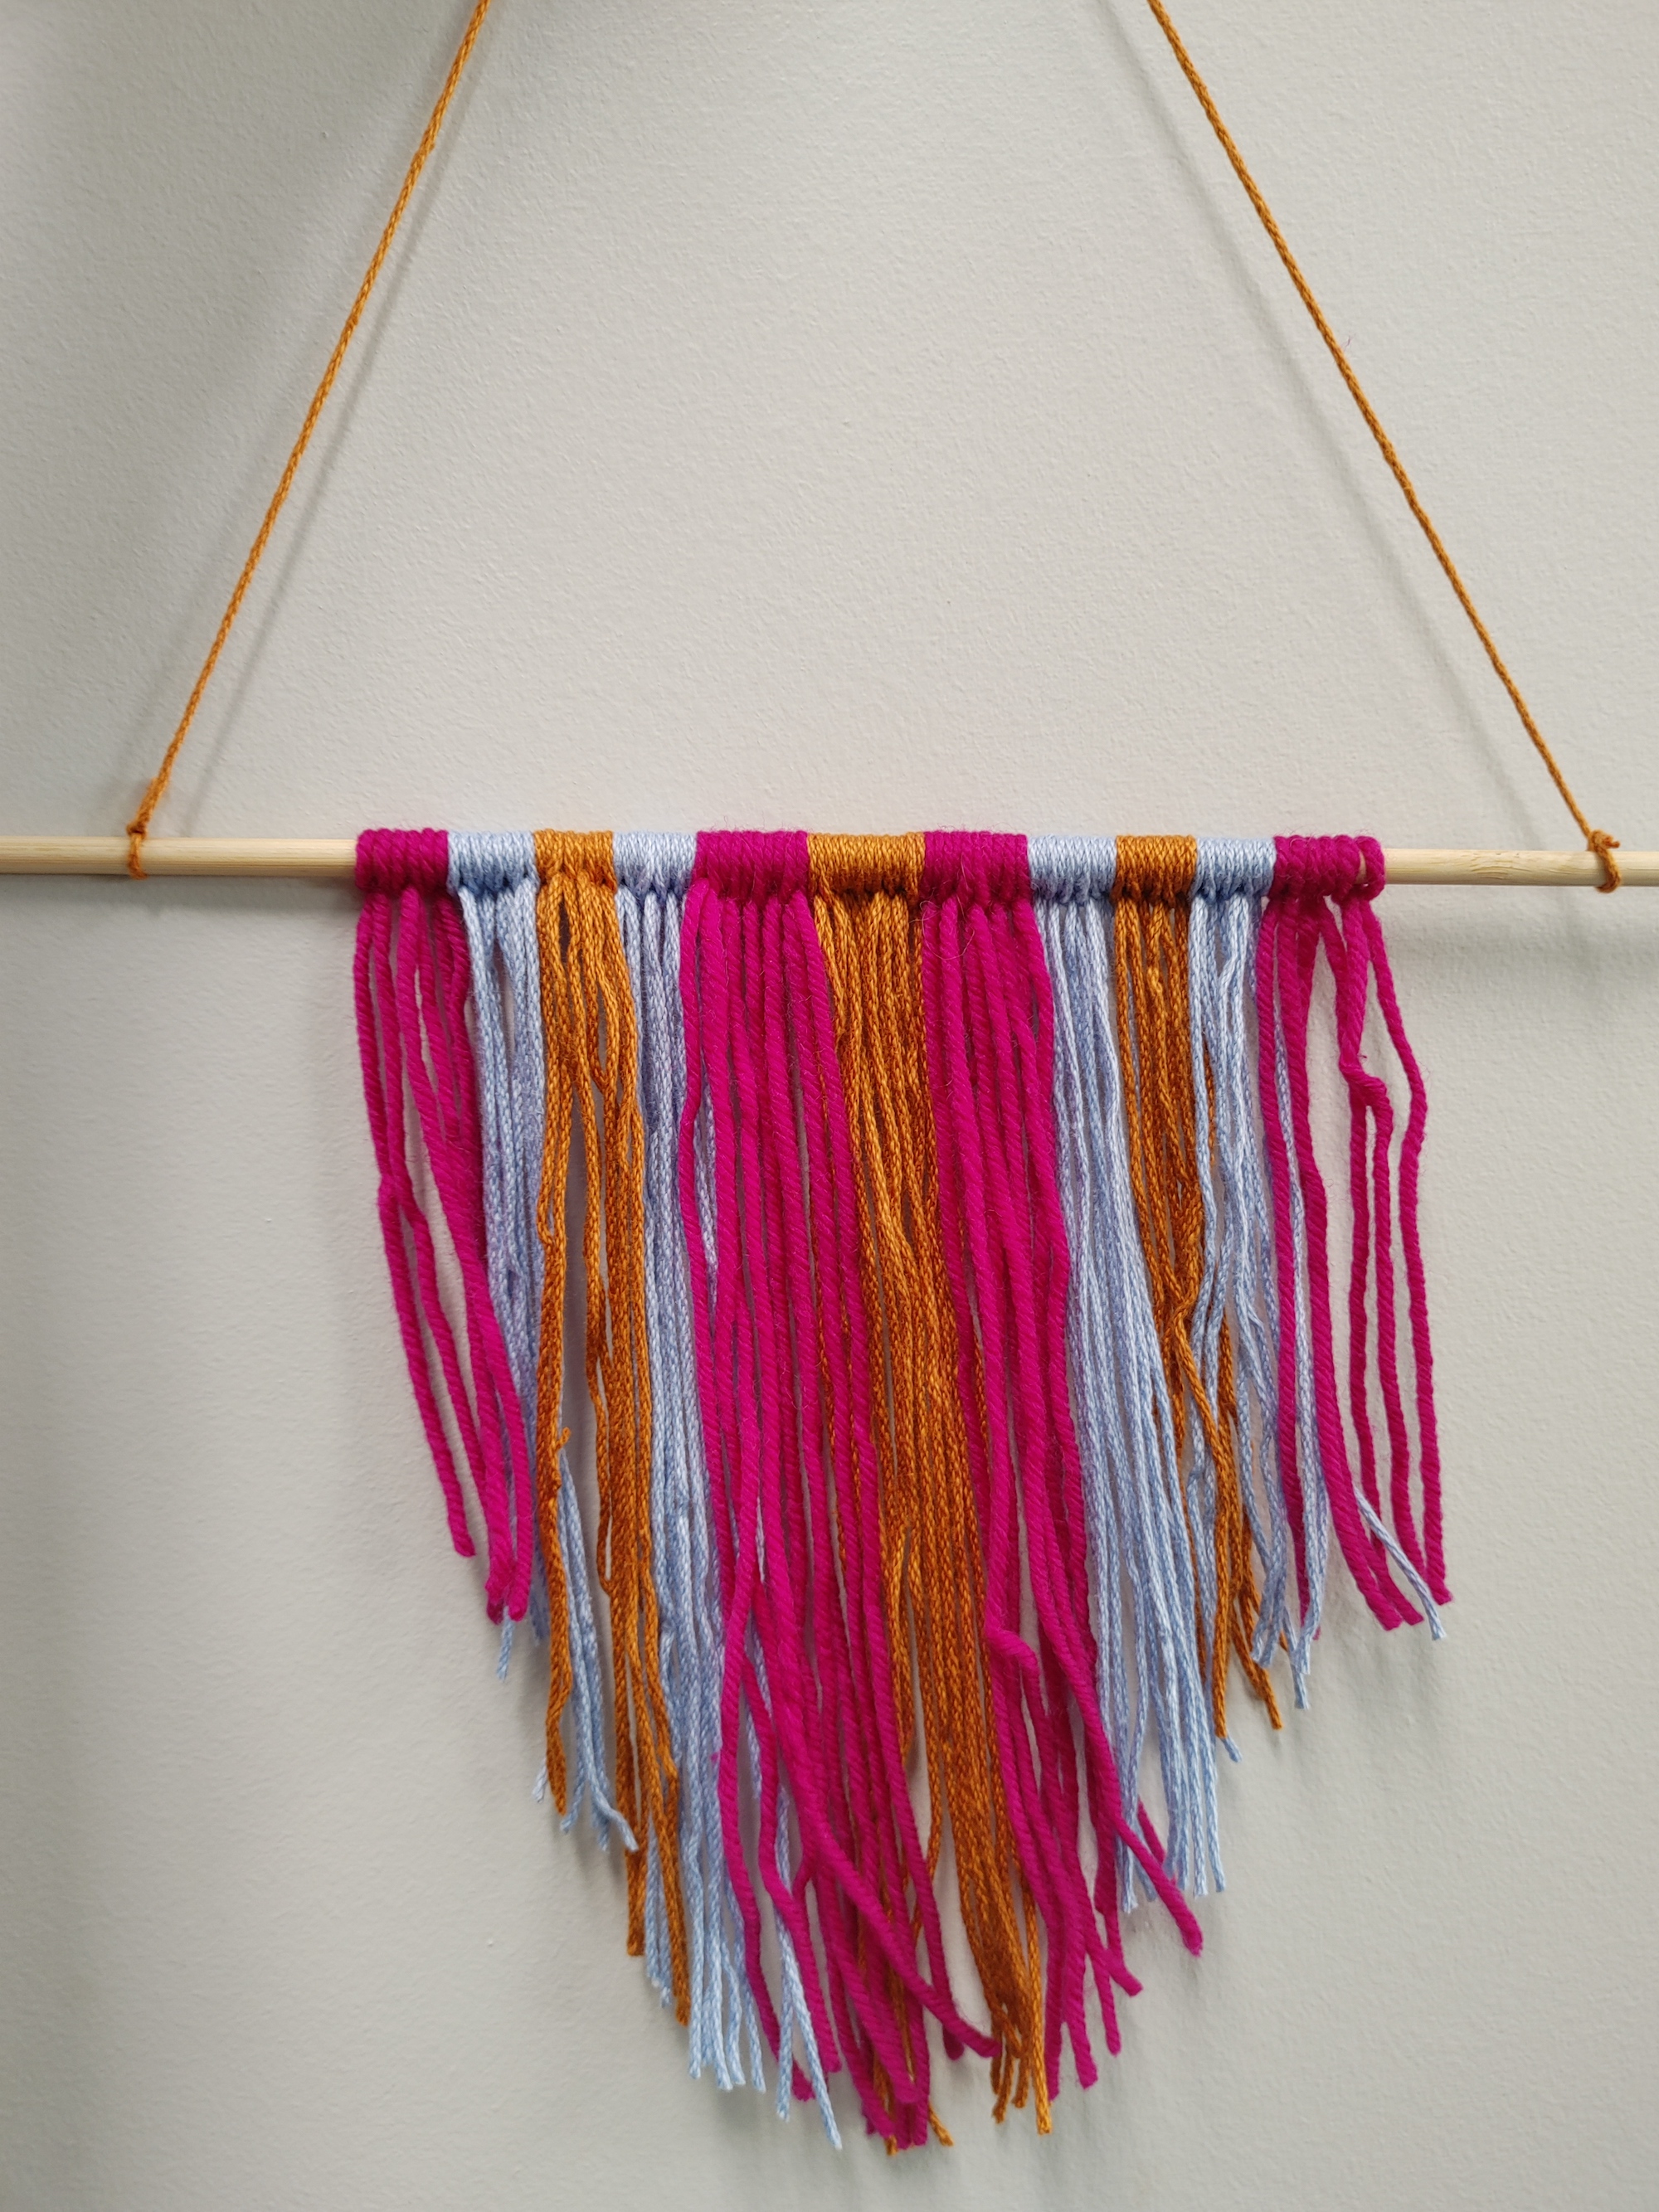 Maroon and purple yarn wall hanging